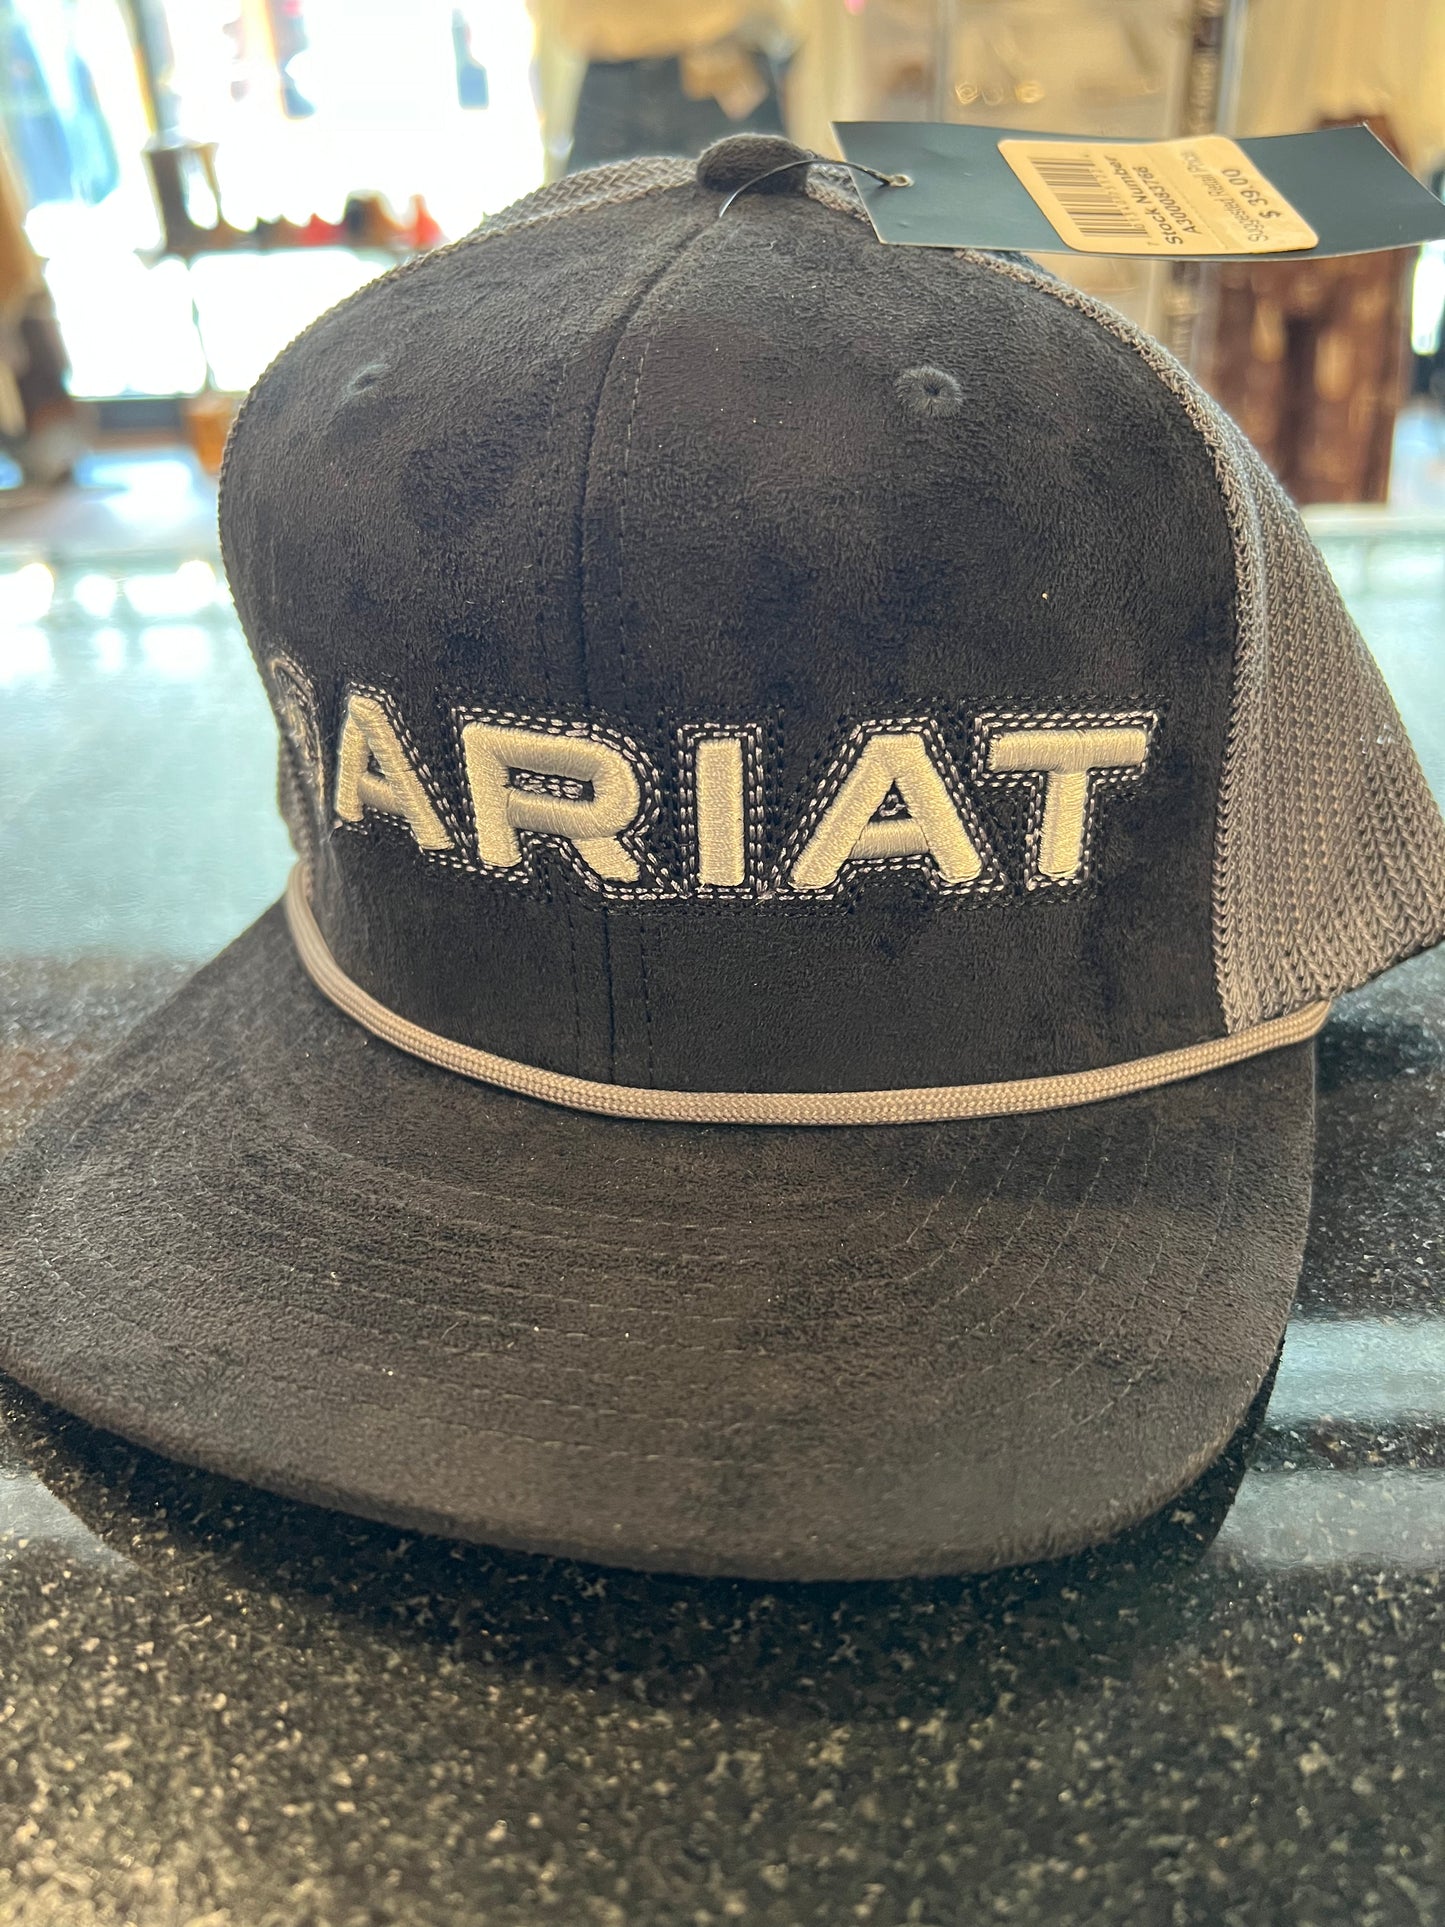 Ariat Black Suede Hat